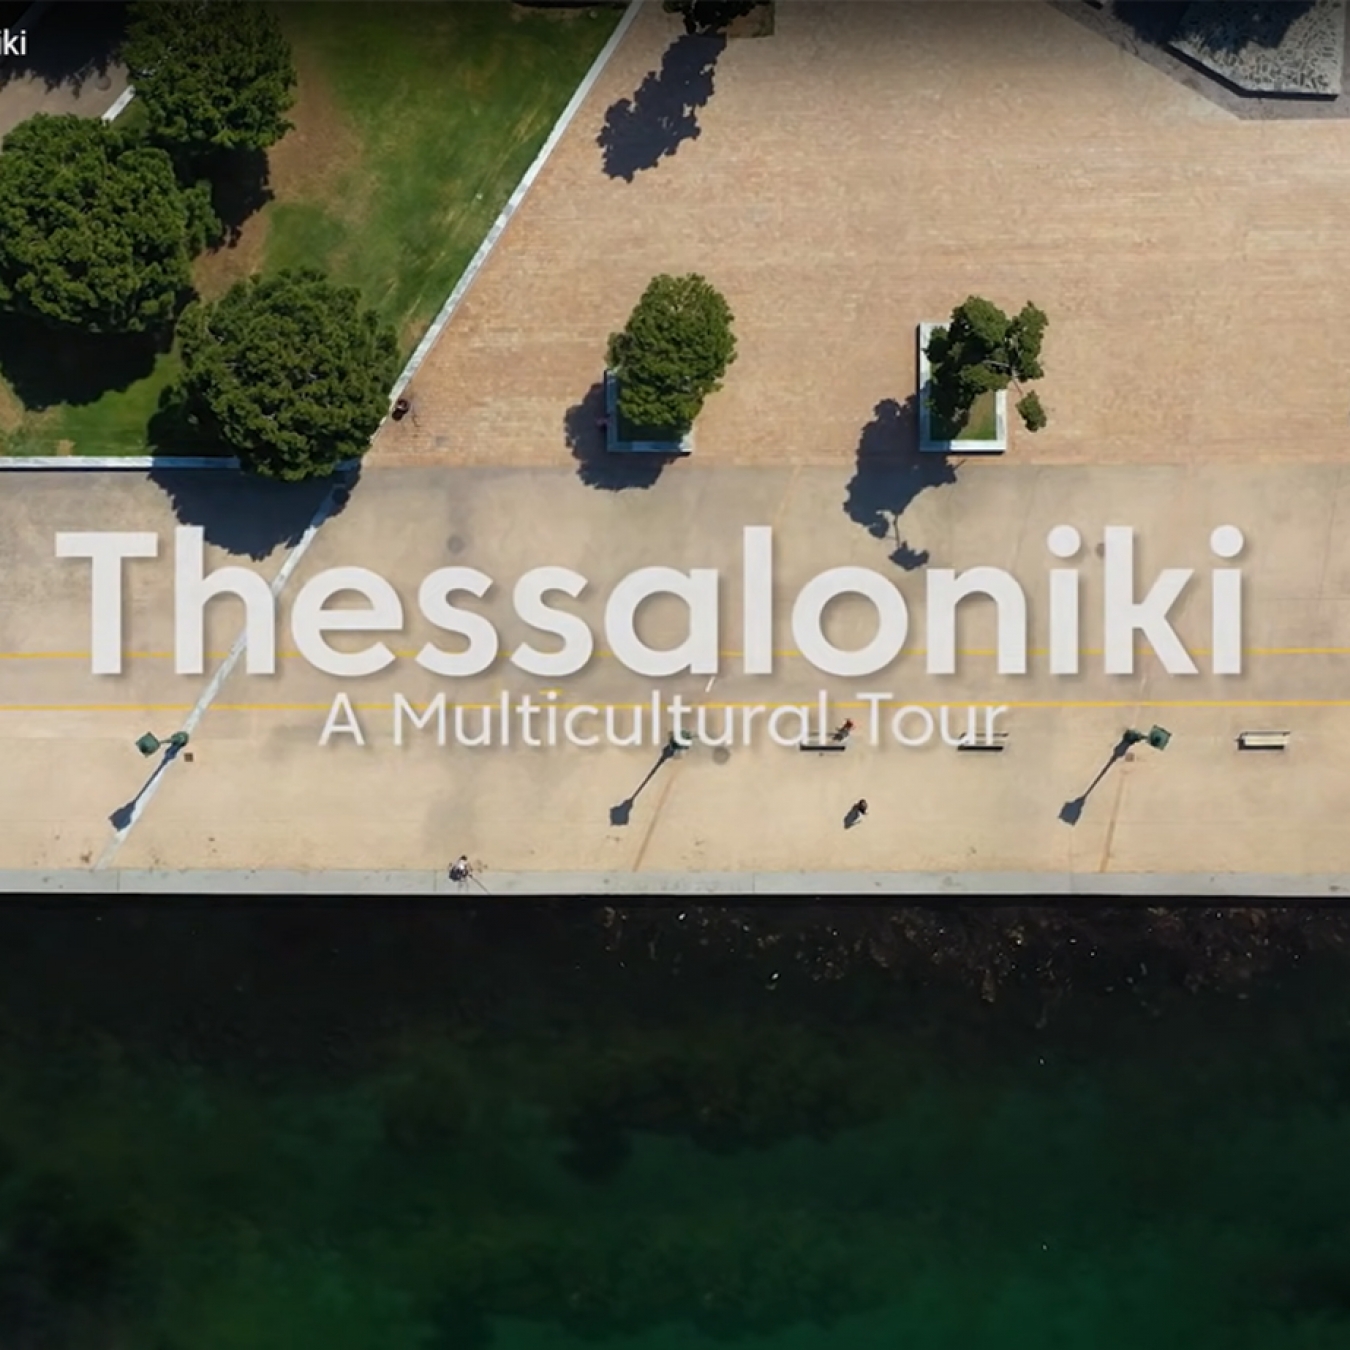 Thessaloniki: A Multicultural Tour